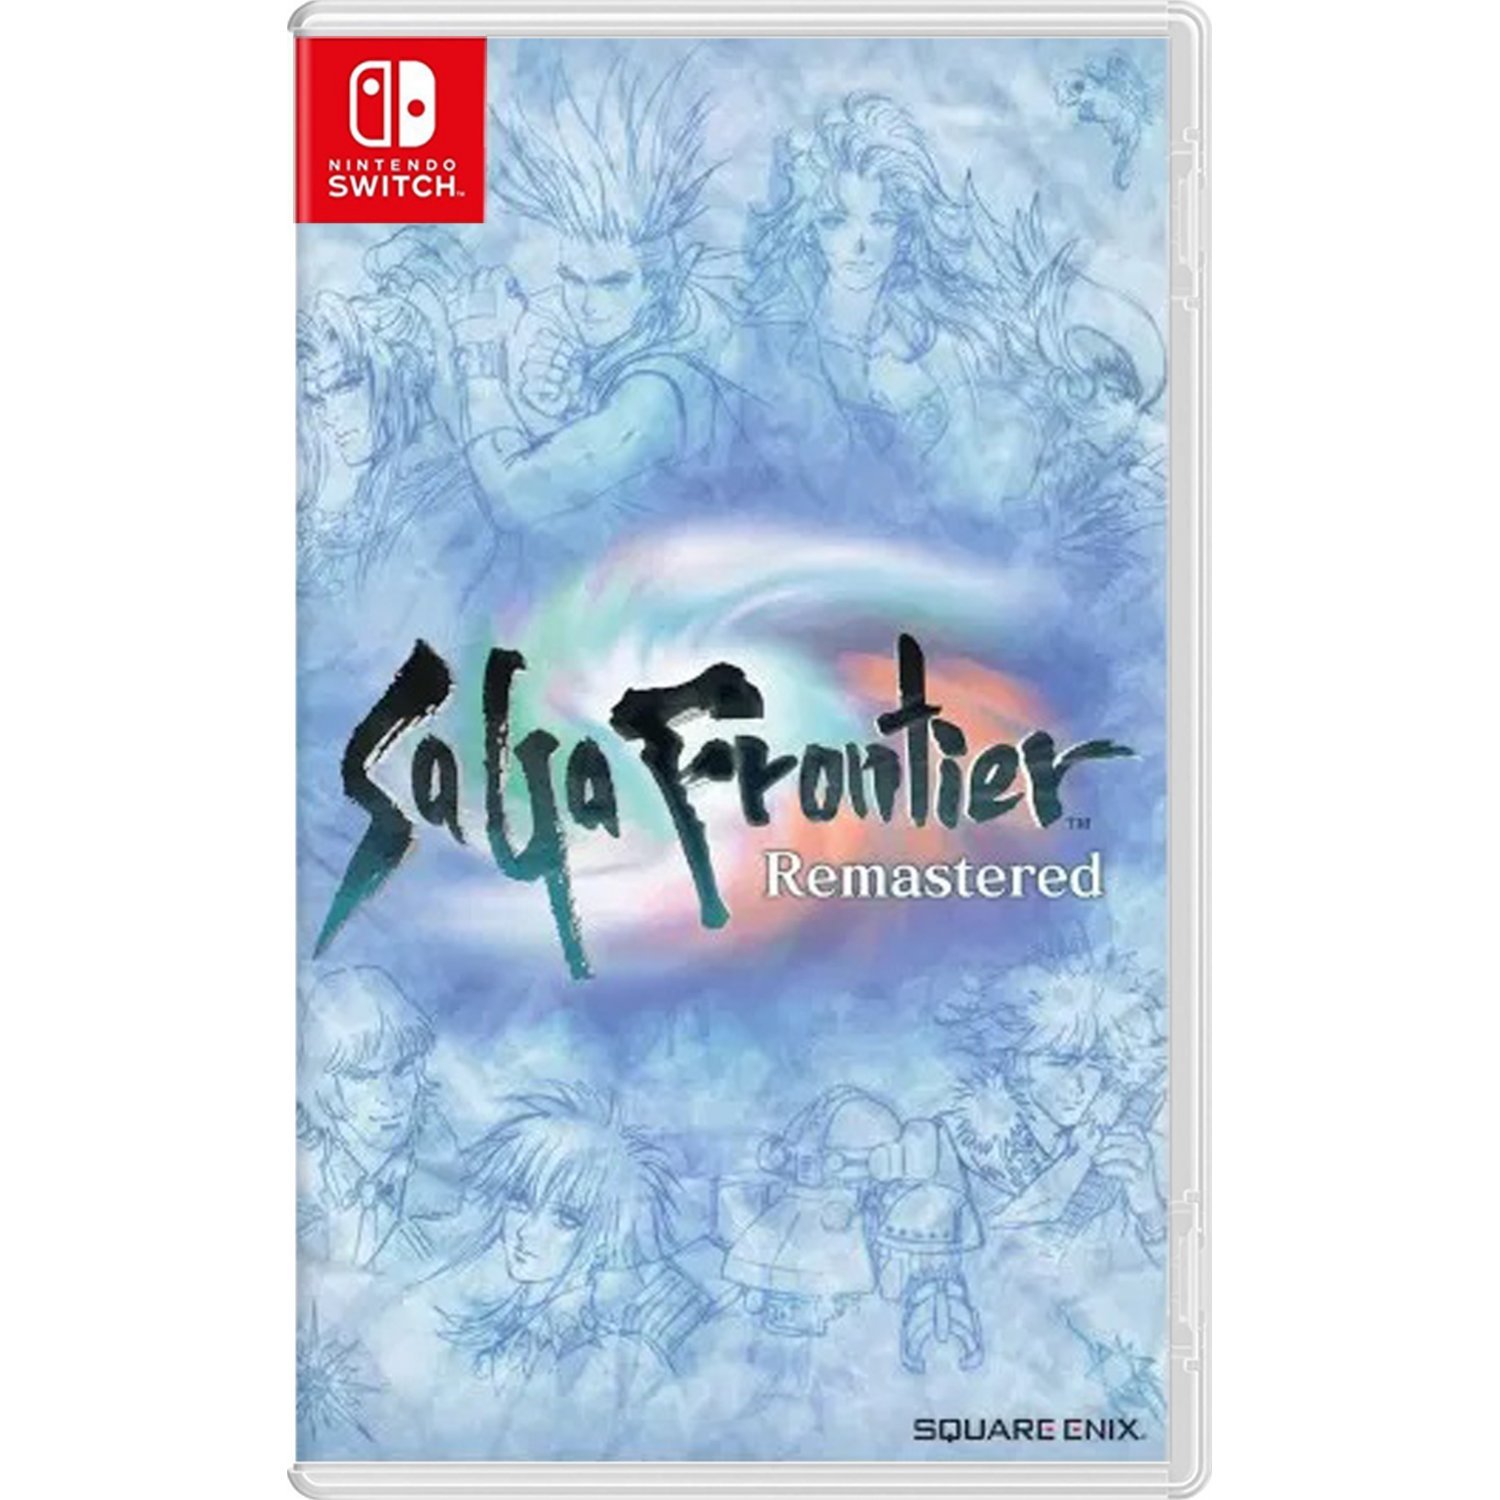 SaGa Frontier Remastered (Import), Square Enix